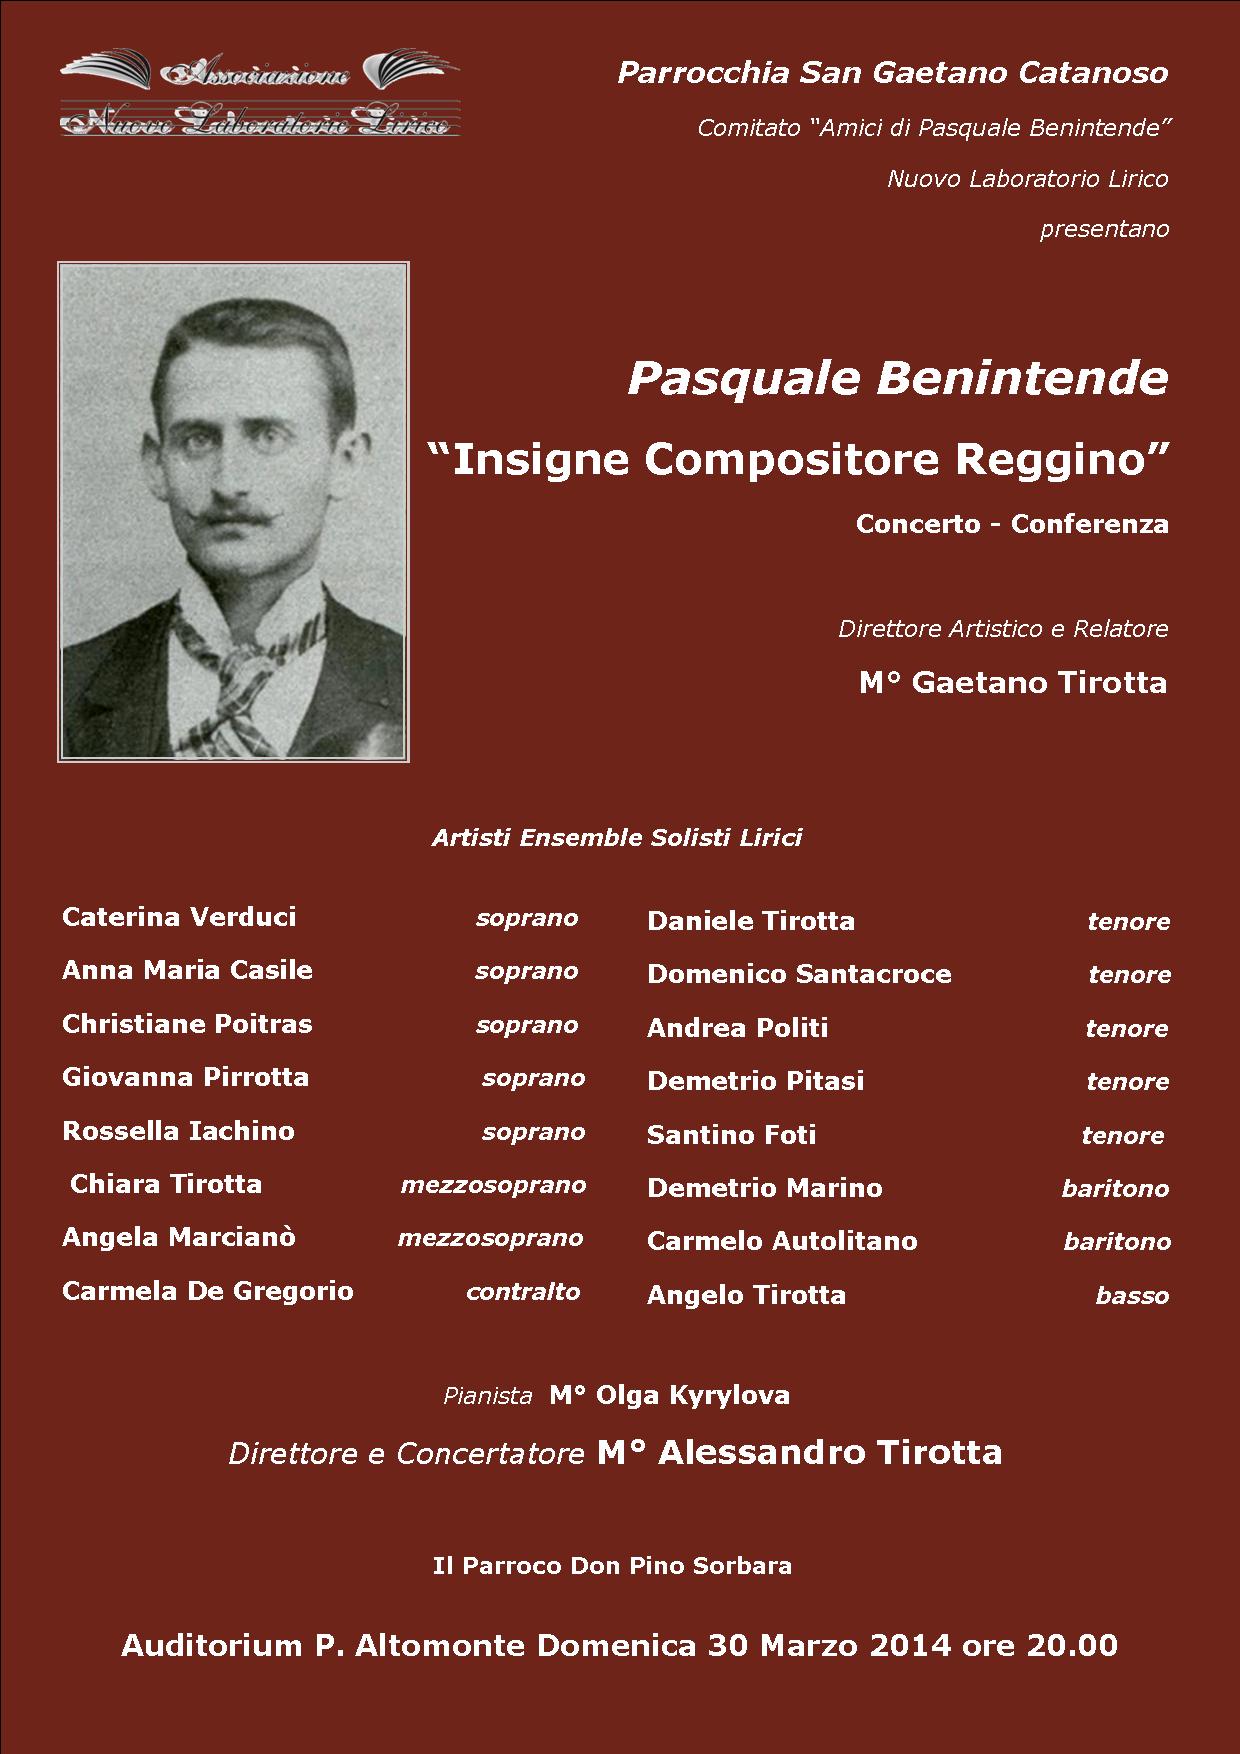 Pasquale Benintende concerto - Conferenza 30.3.2014